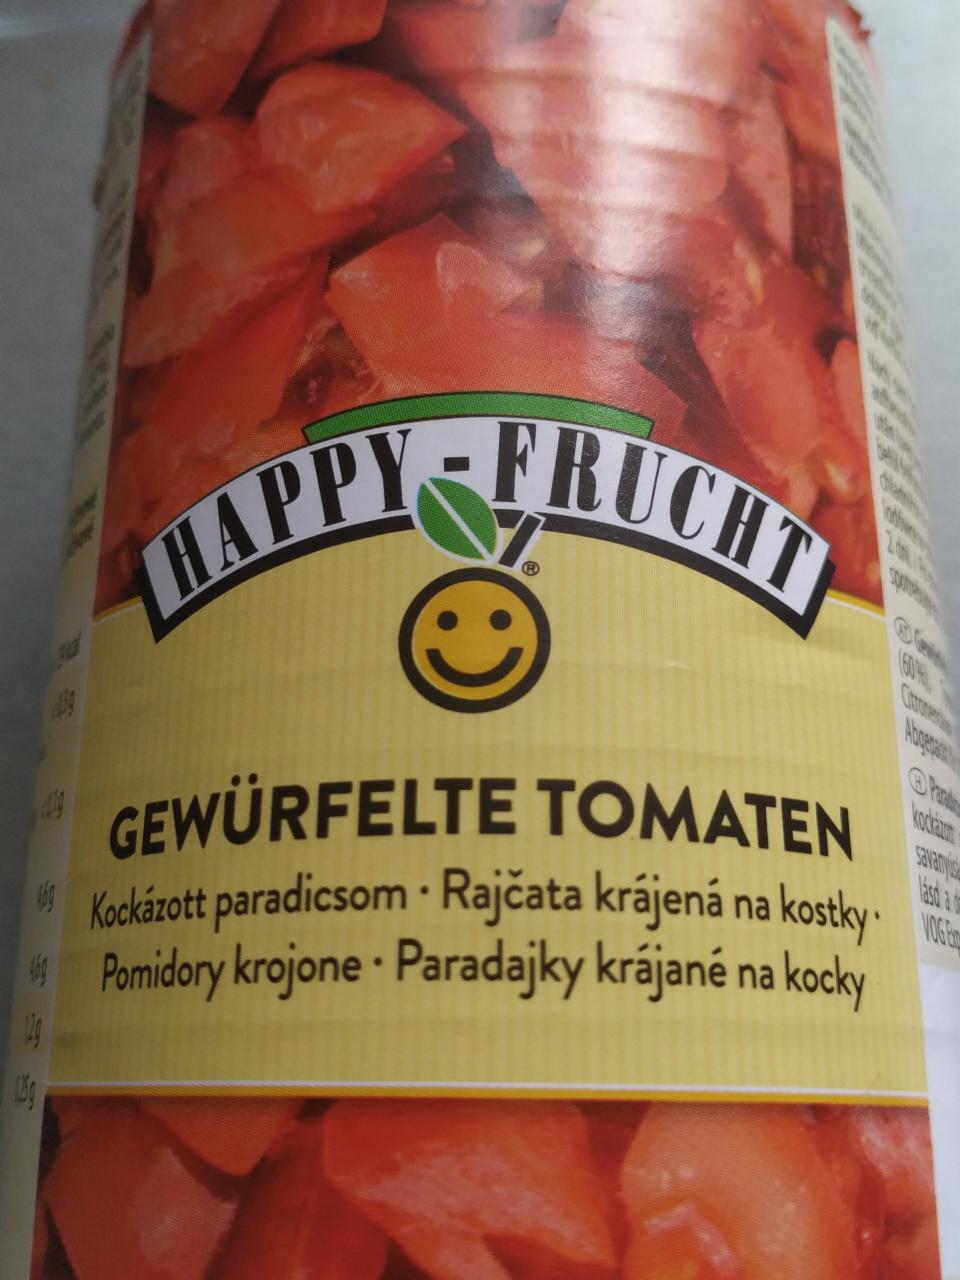 Fotografie - Gewürfelte tomaten (rajčata krájená na kostky) Happy - frucht